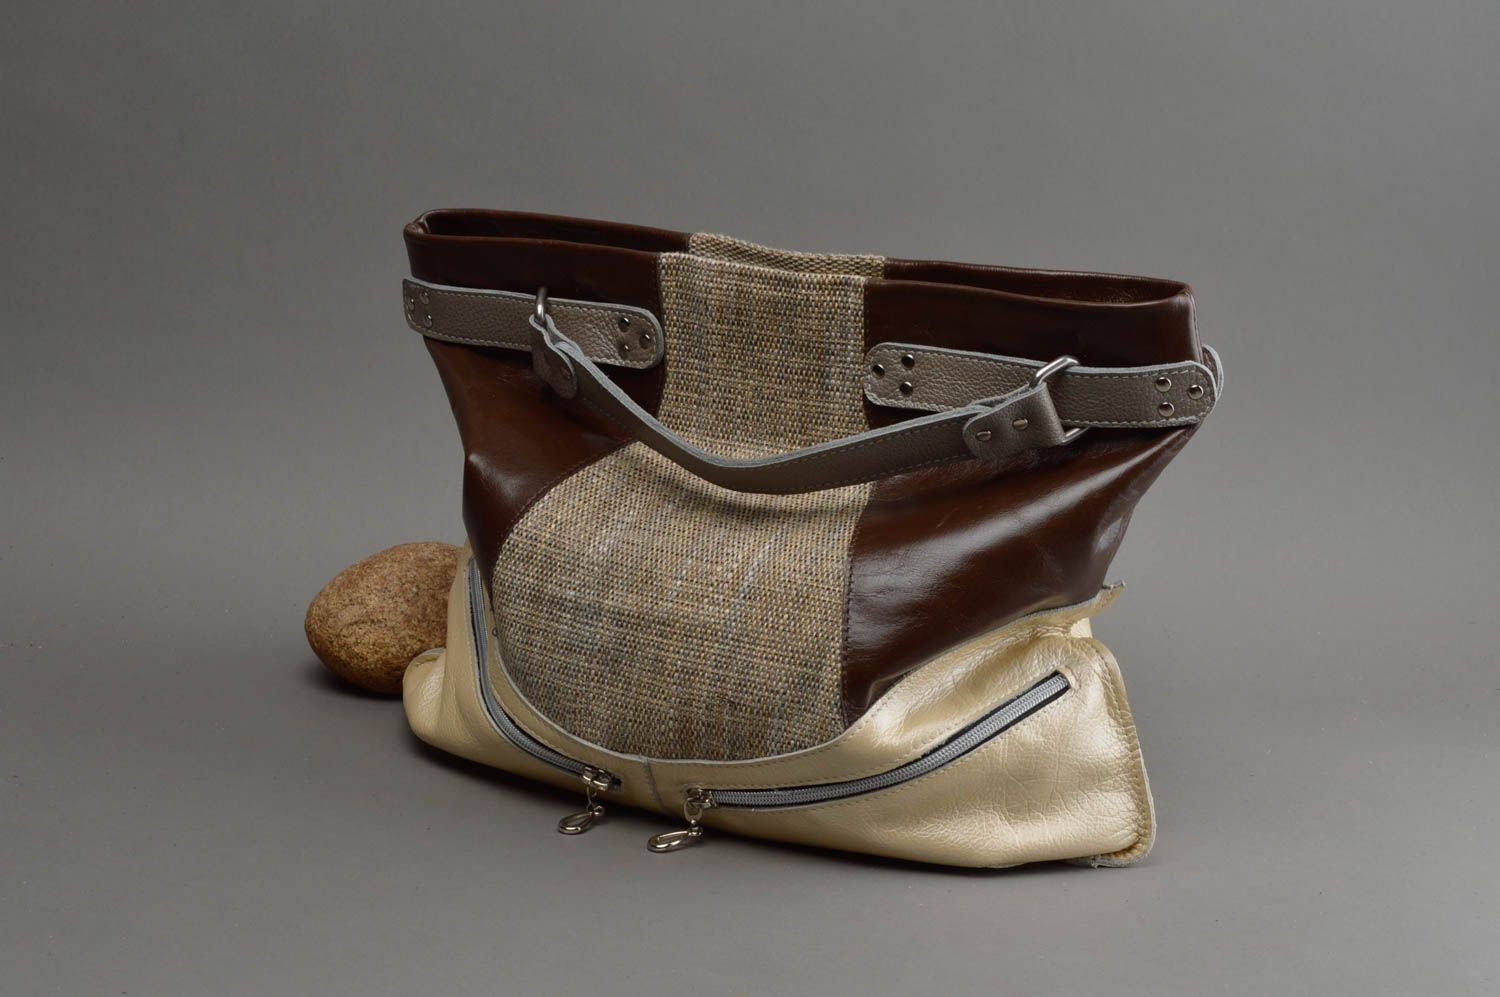 Stylish handmade leather handbag unusual bag for women fashion accessories photo 1